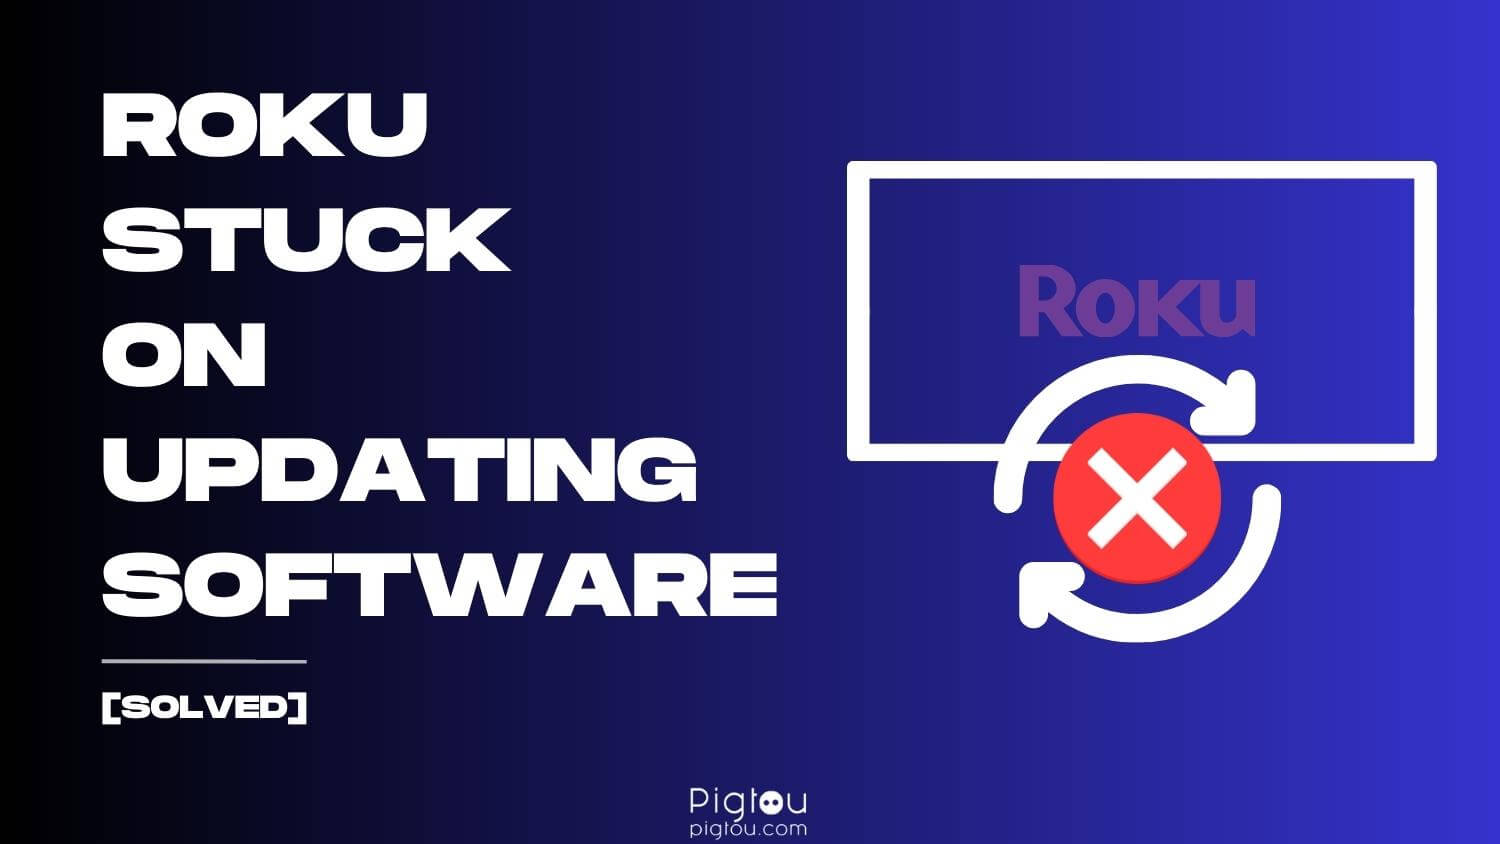 Roku Stuck on Updating Software [SOLVED!]